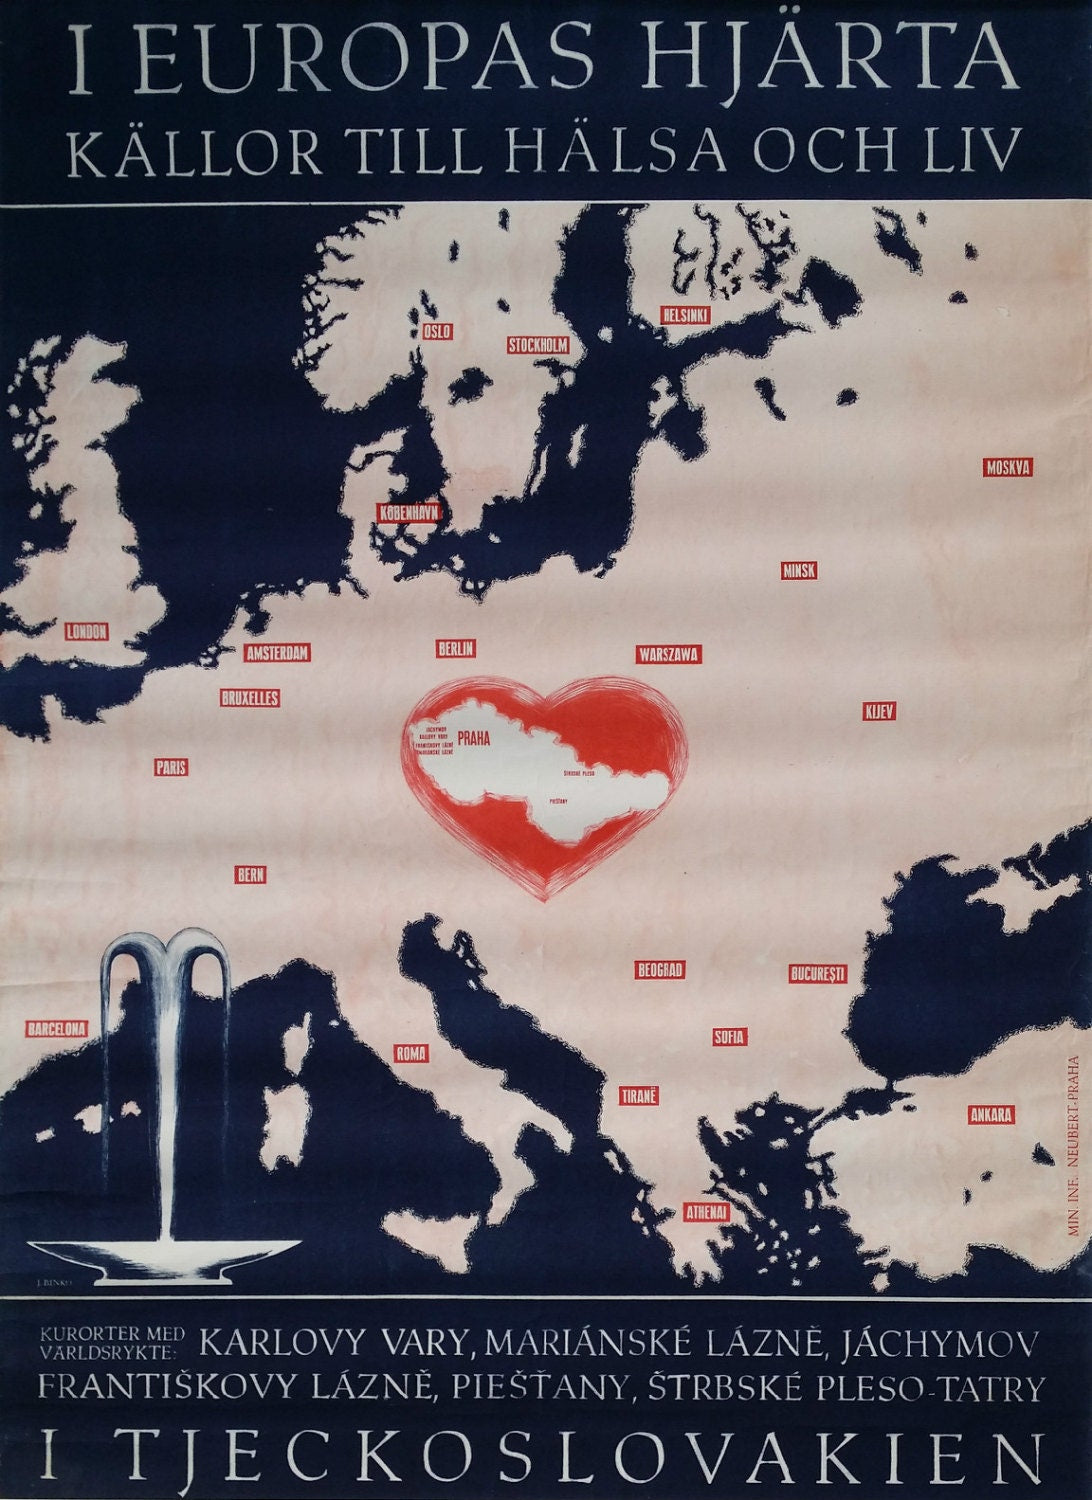 1960s Spas in Europe - Original Vintage Poster